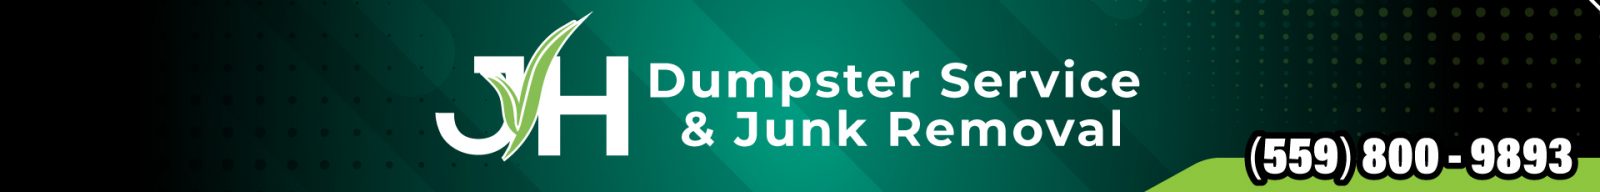 JH Dumpster Service & Junk Removal